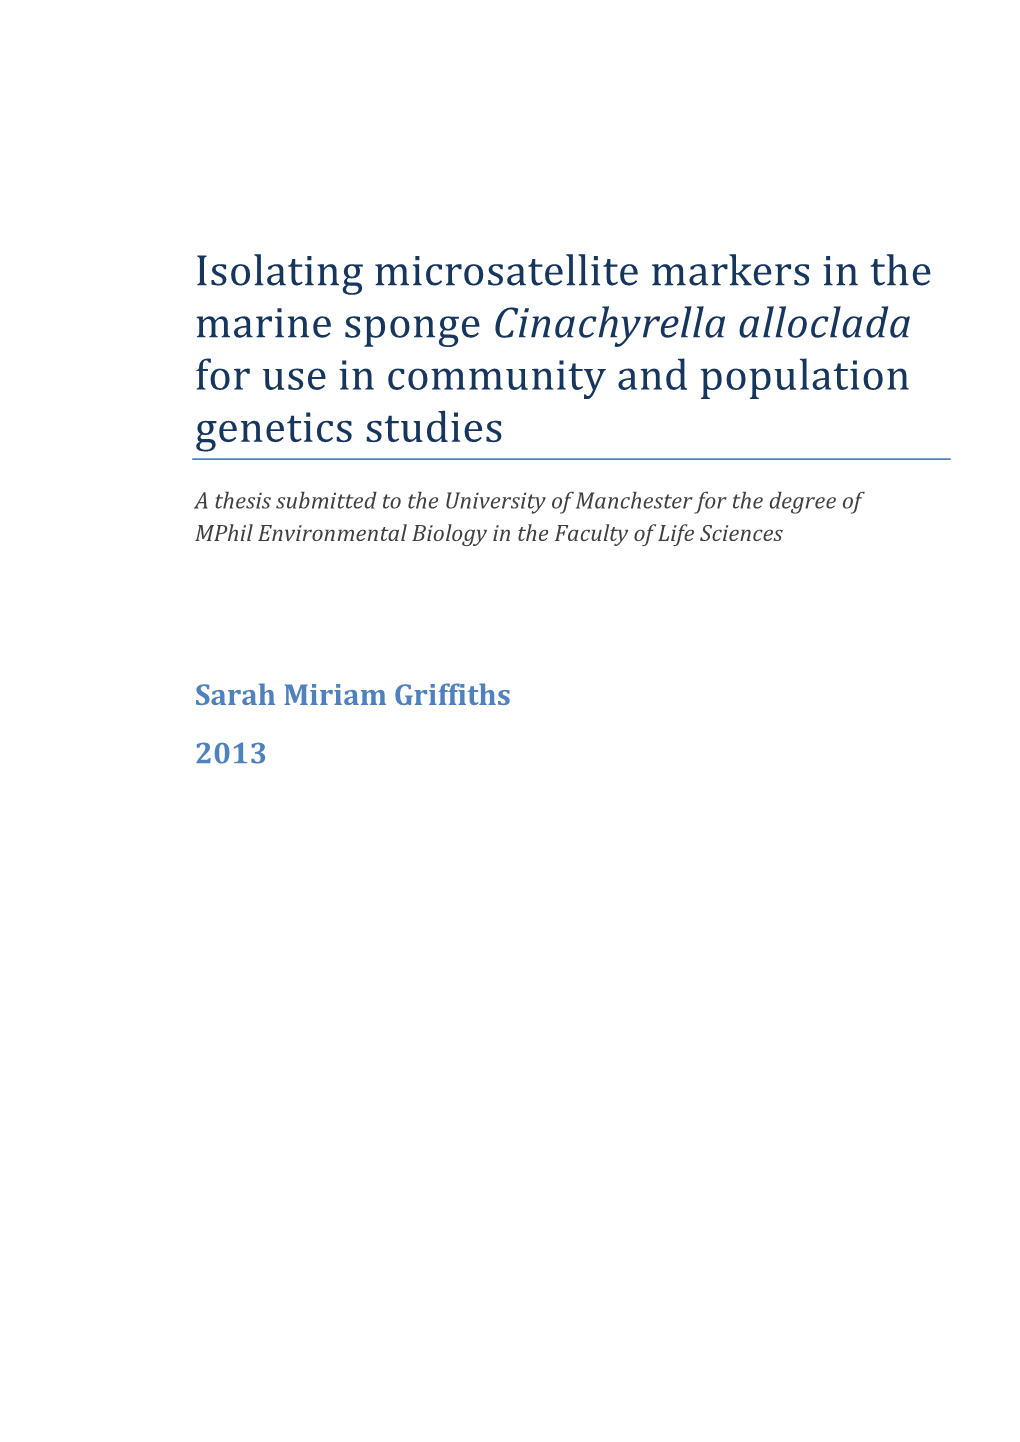 Isolating Microsatellite Markers in the Marine Sponge Cinachyrella Alloclada for Use in Community and Population Genetics Studies